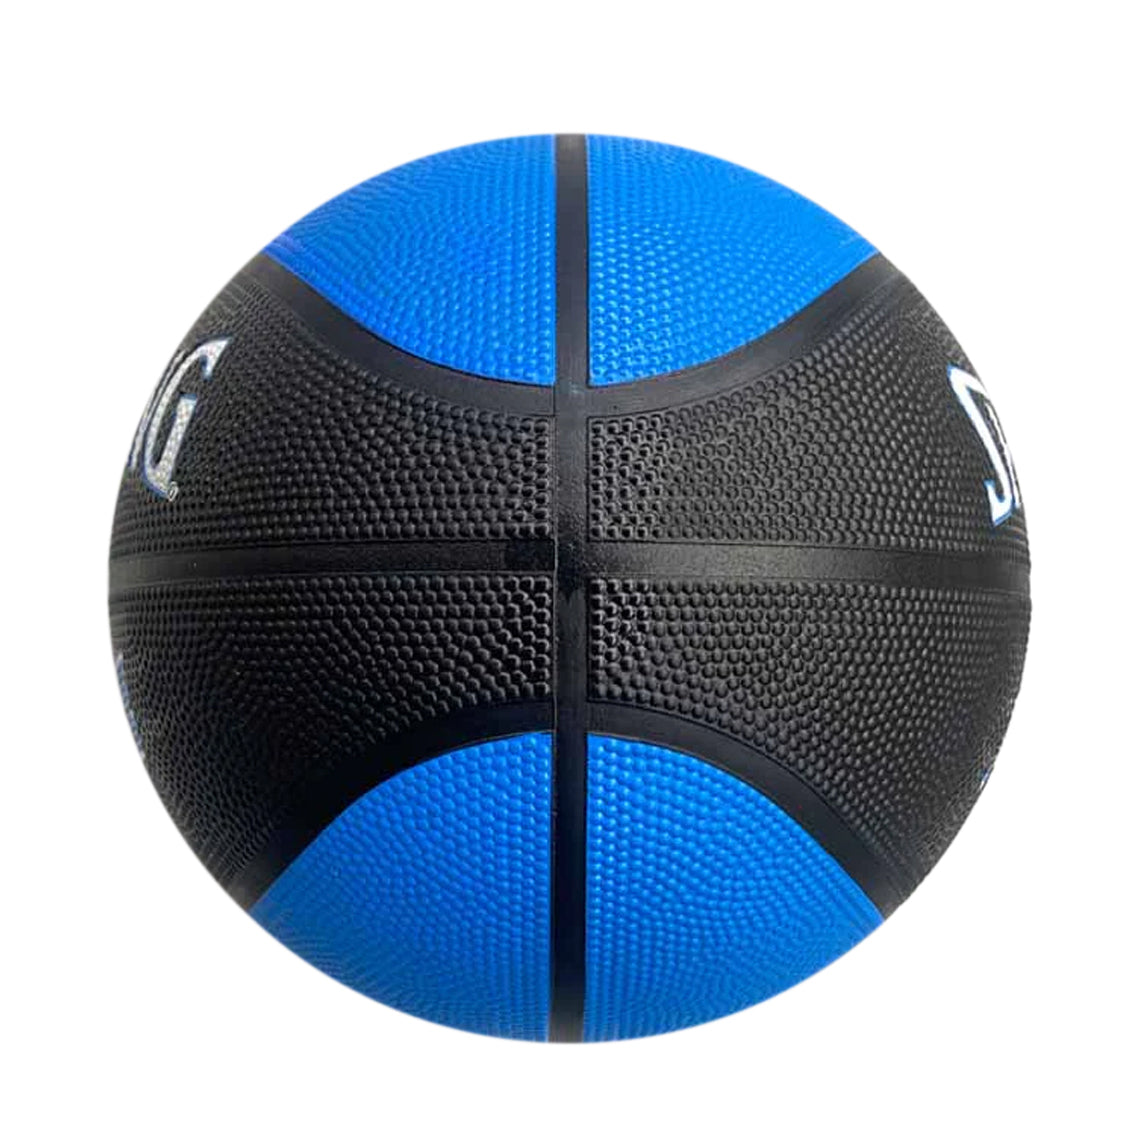 Spalding Force All Surface Basketball, Size 7 (Blue/Black) - Best Price online Prokicksports.com